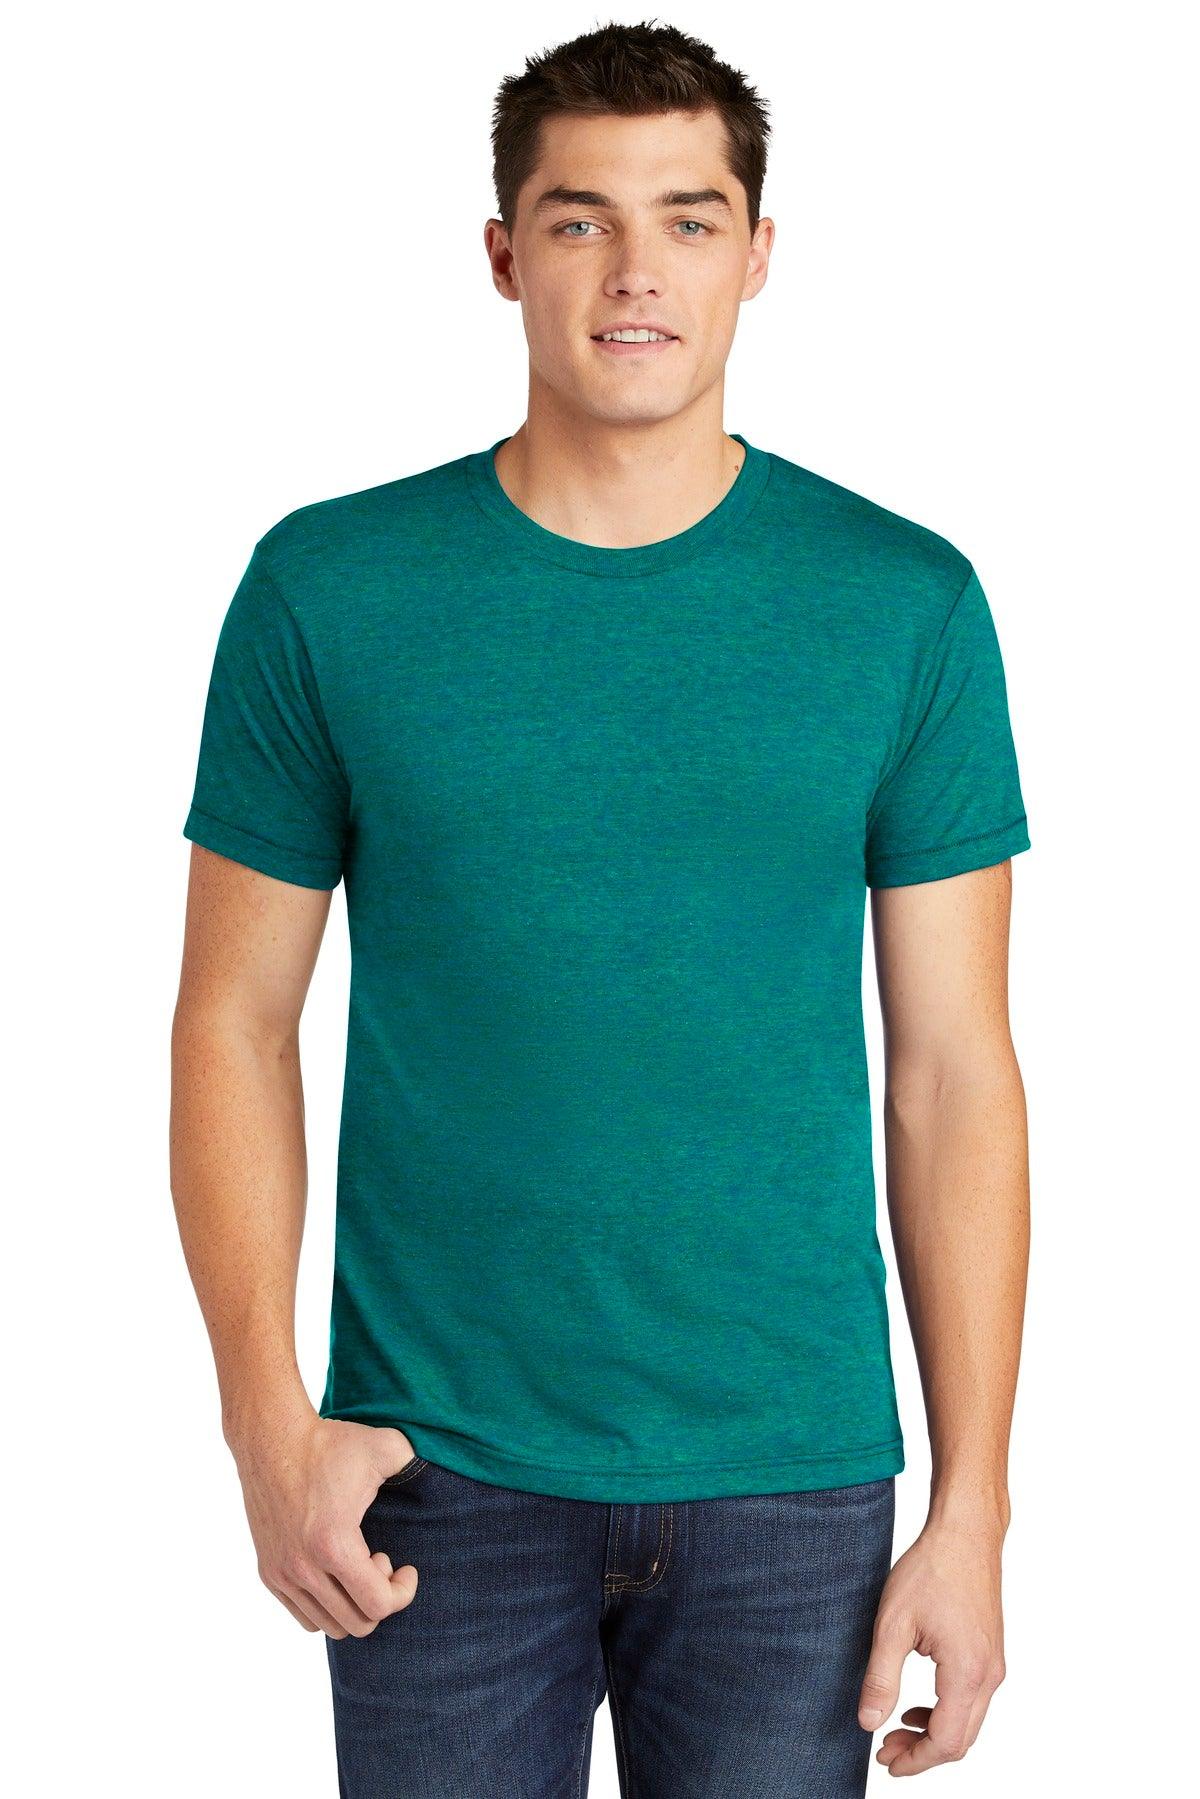 American Apparel Tri-Blend Short Sleeve Track T-Shirt. TR401W - Dresses Max